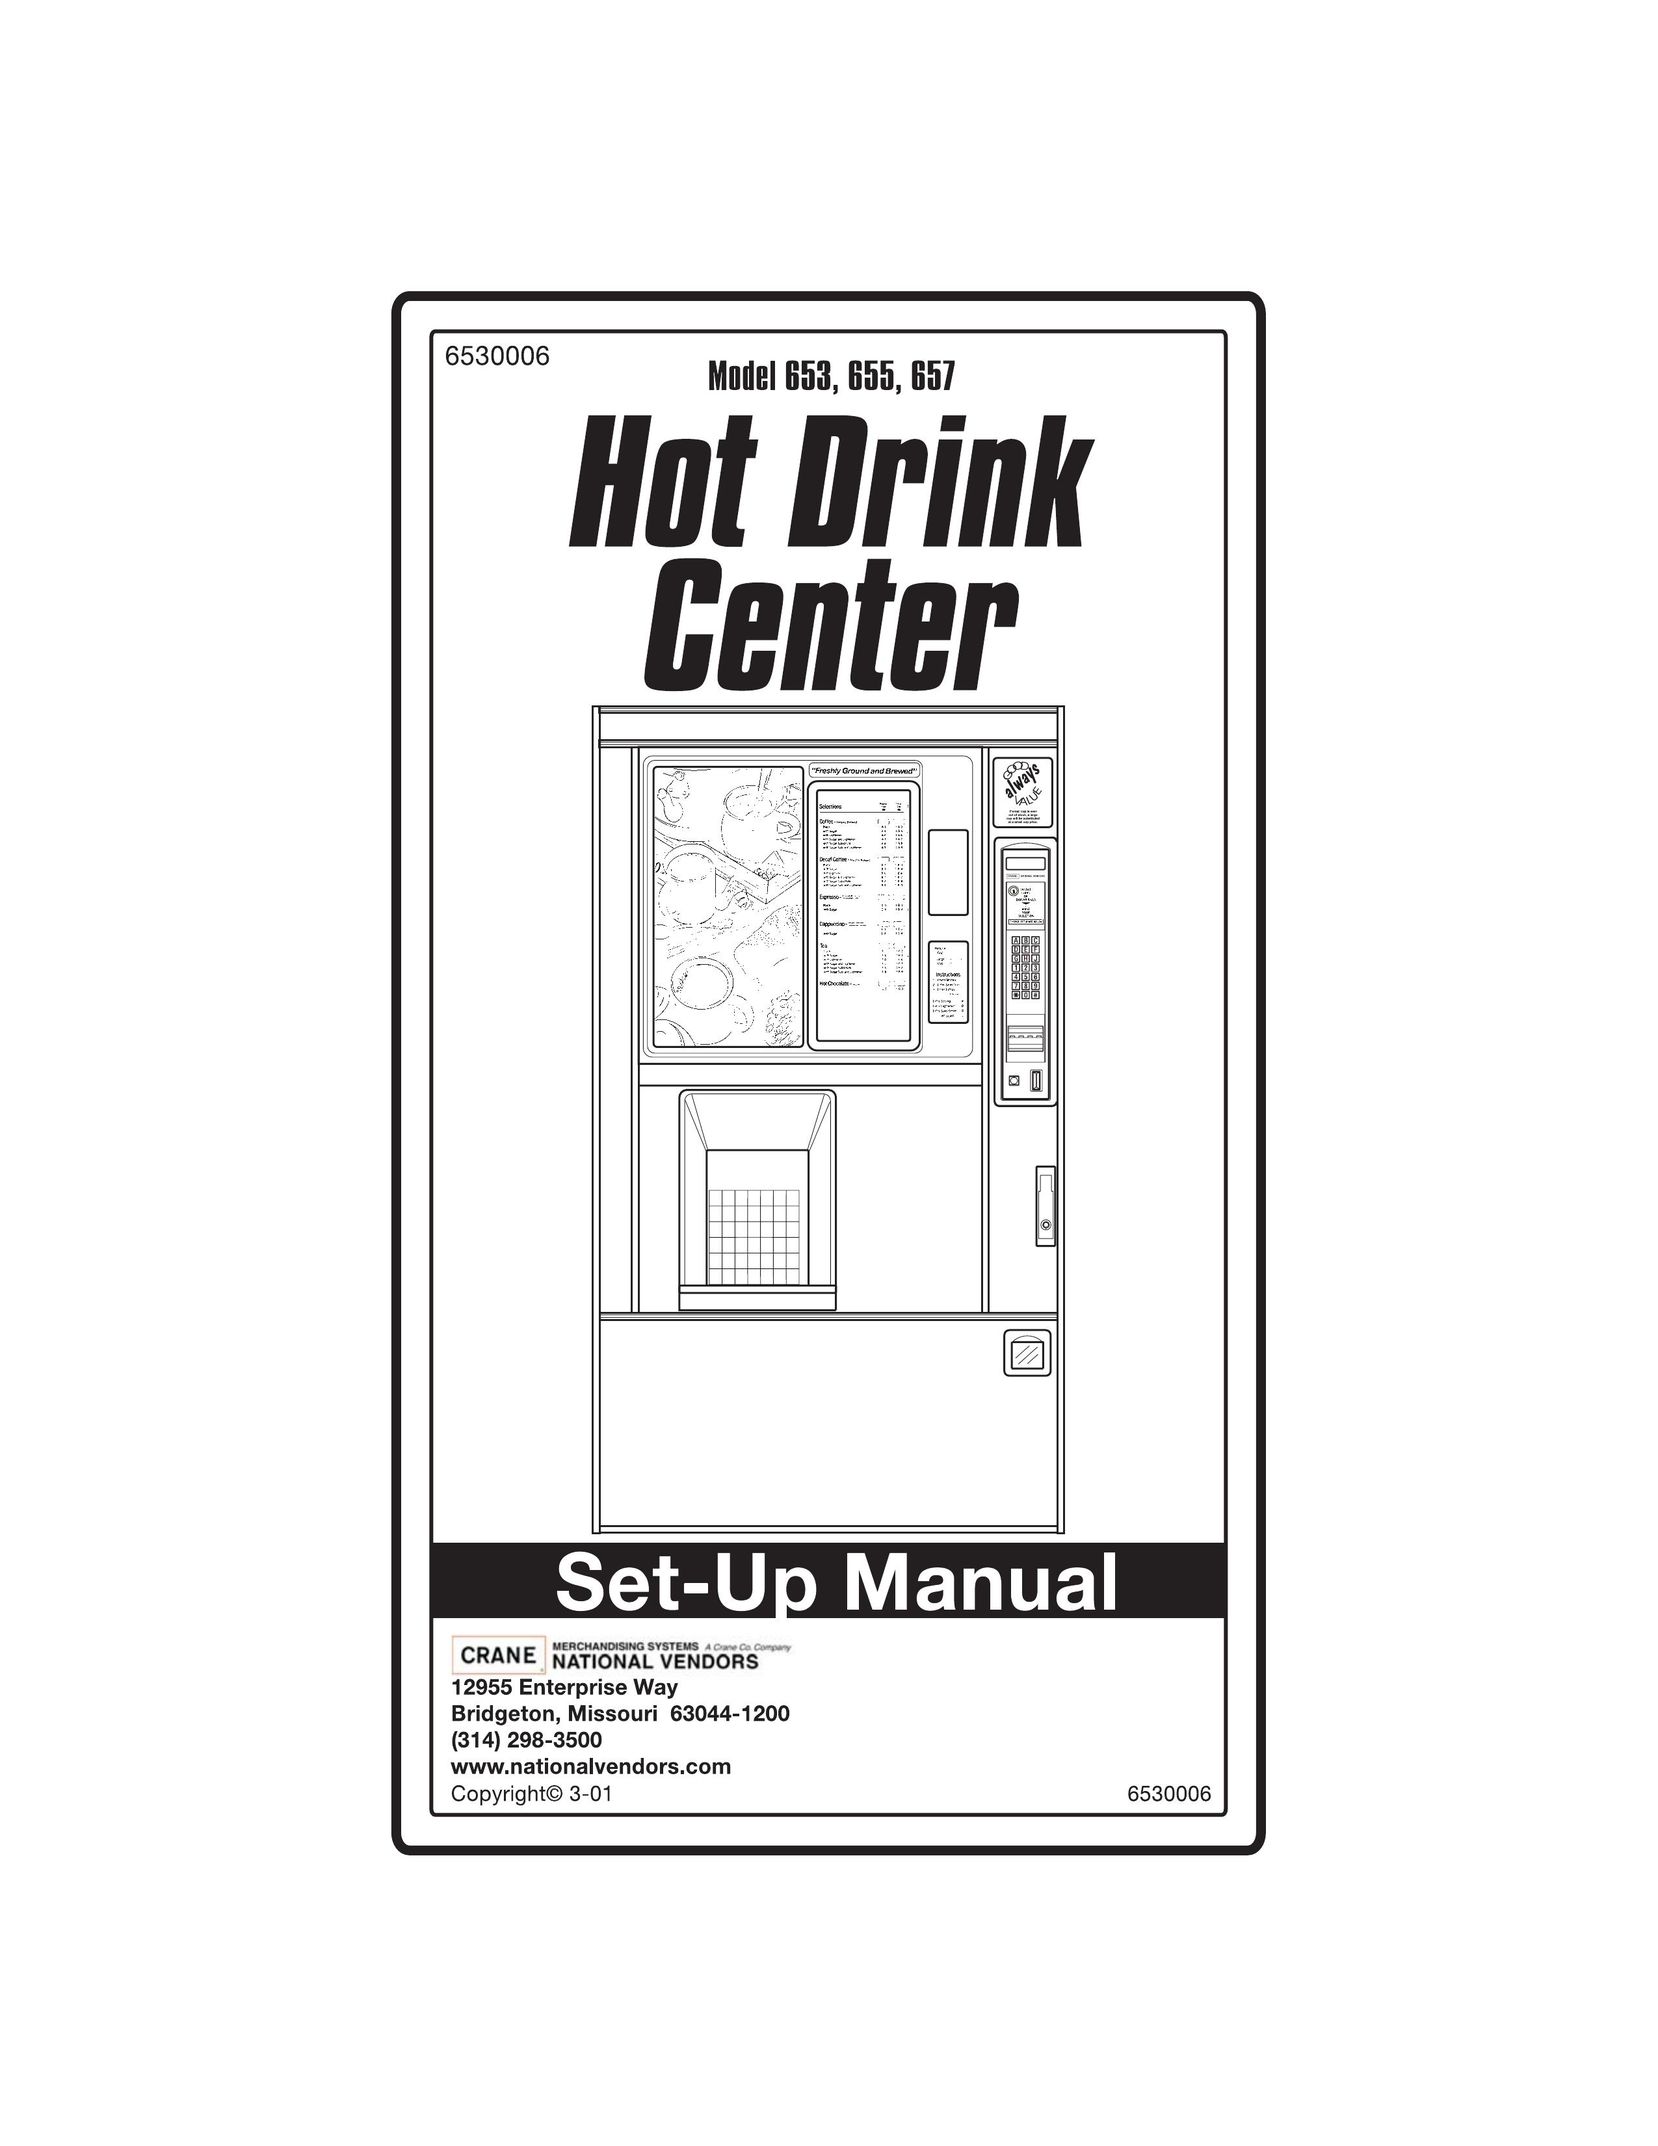 Crane Merchandising Systems Hot Drink Center Hot Beverage Maker User Manual